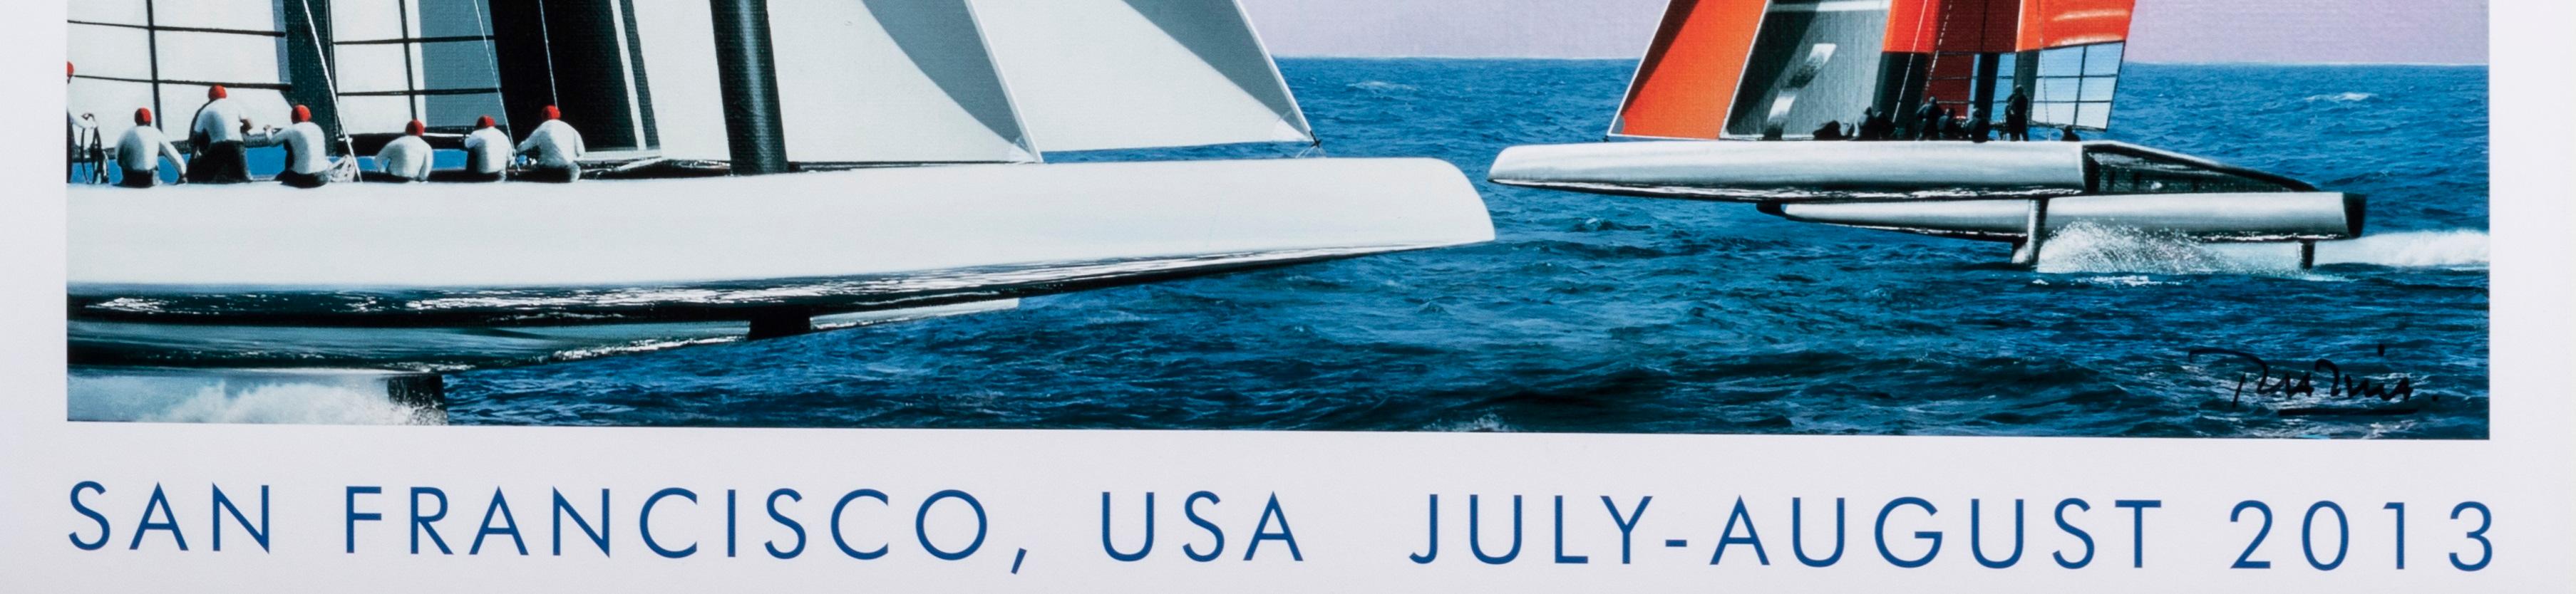 French Razzia, Original Louis Vuitton Cup, San Fransisco, Sailing Ship, Boat, 2013 For Sale